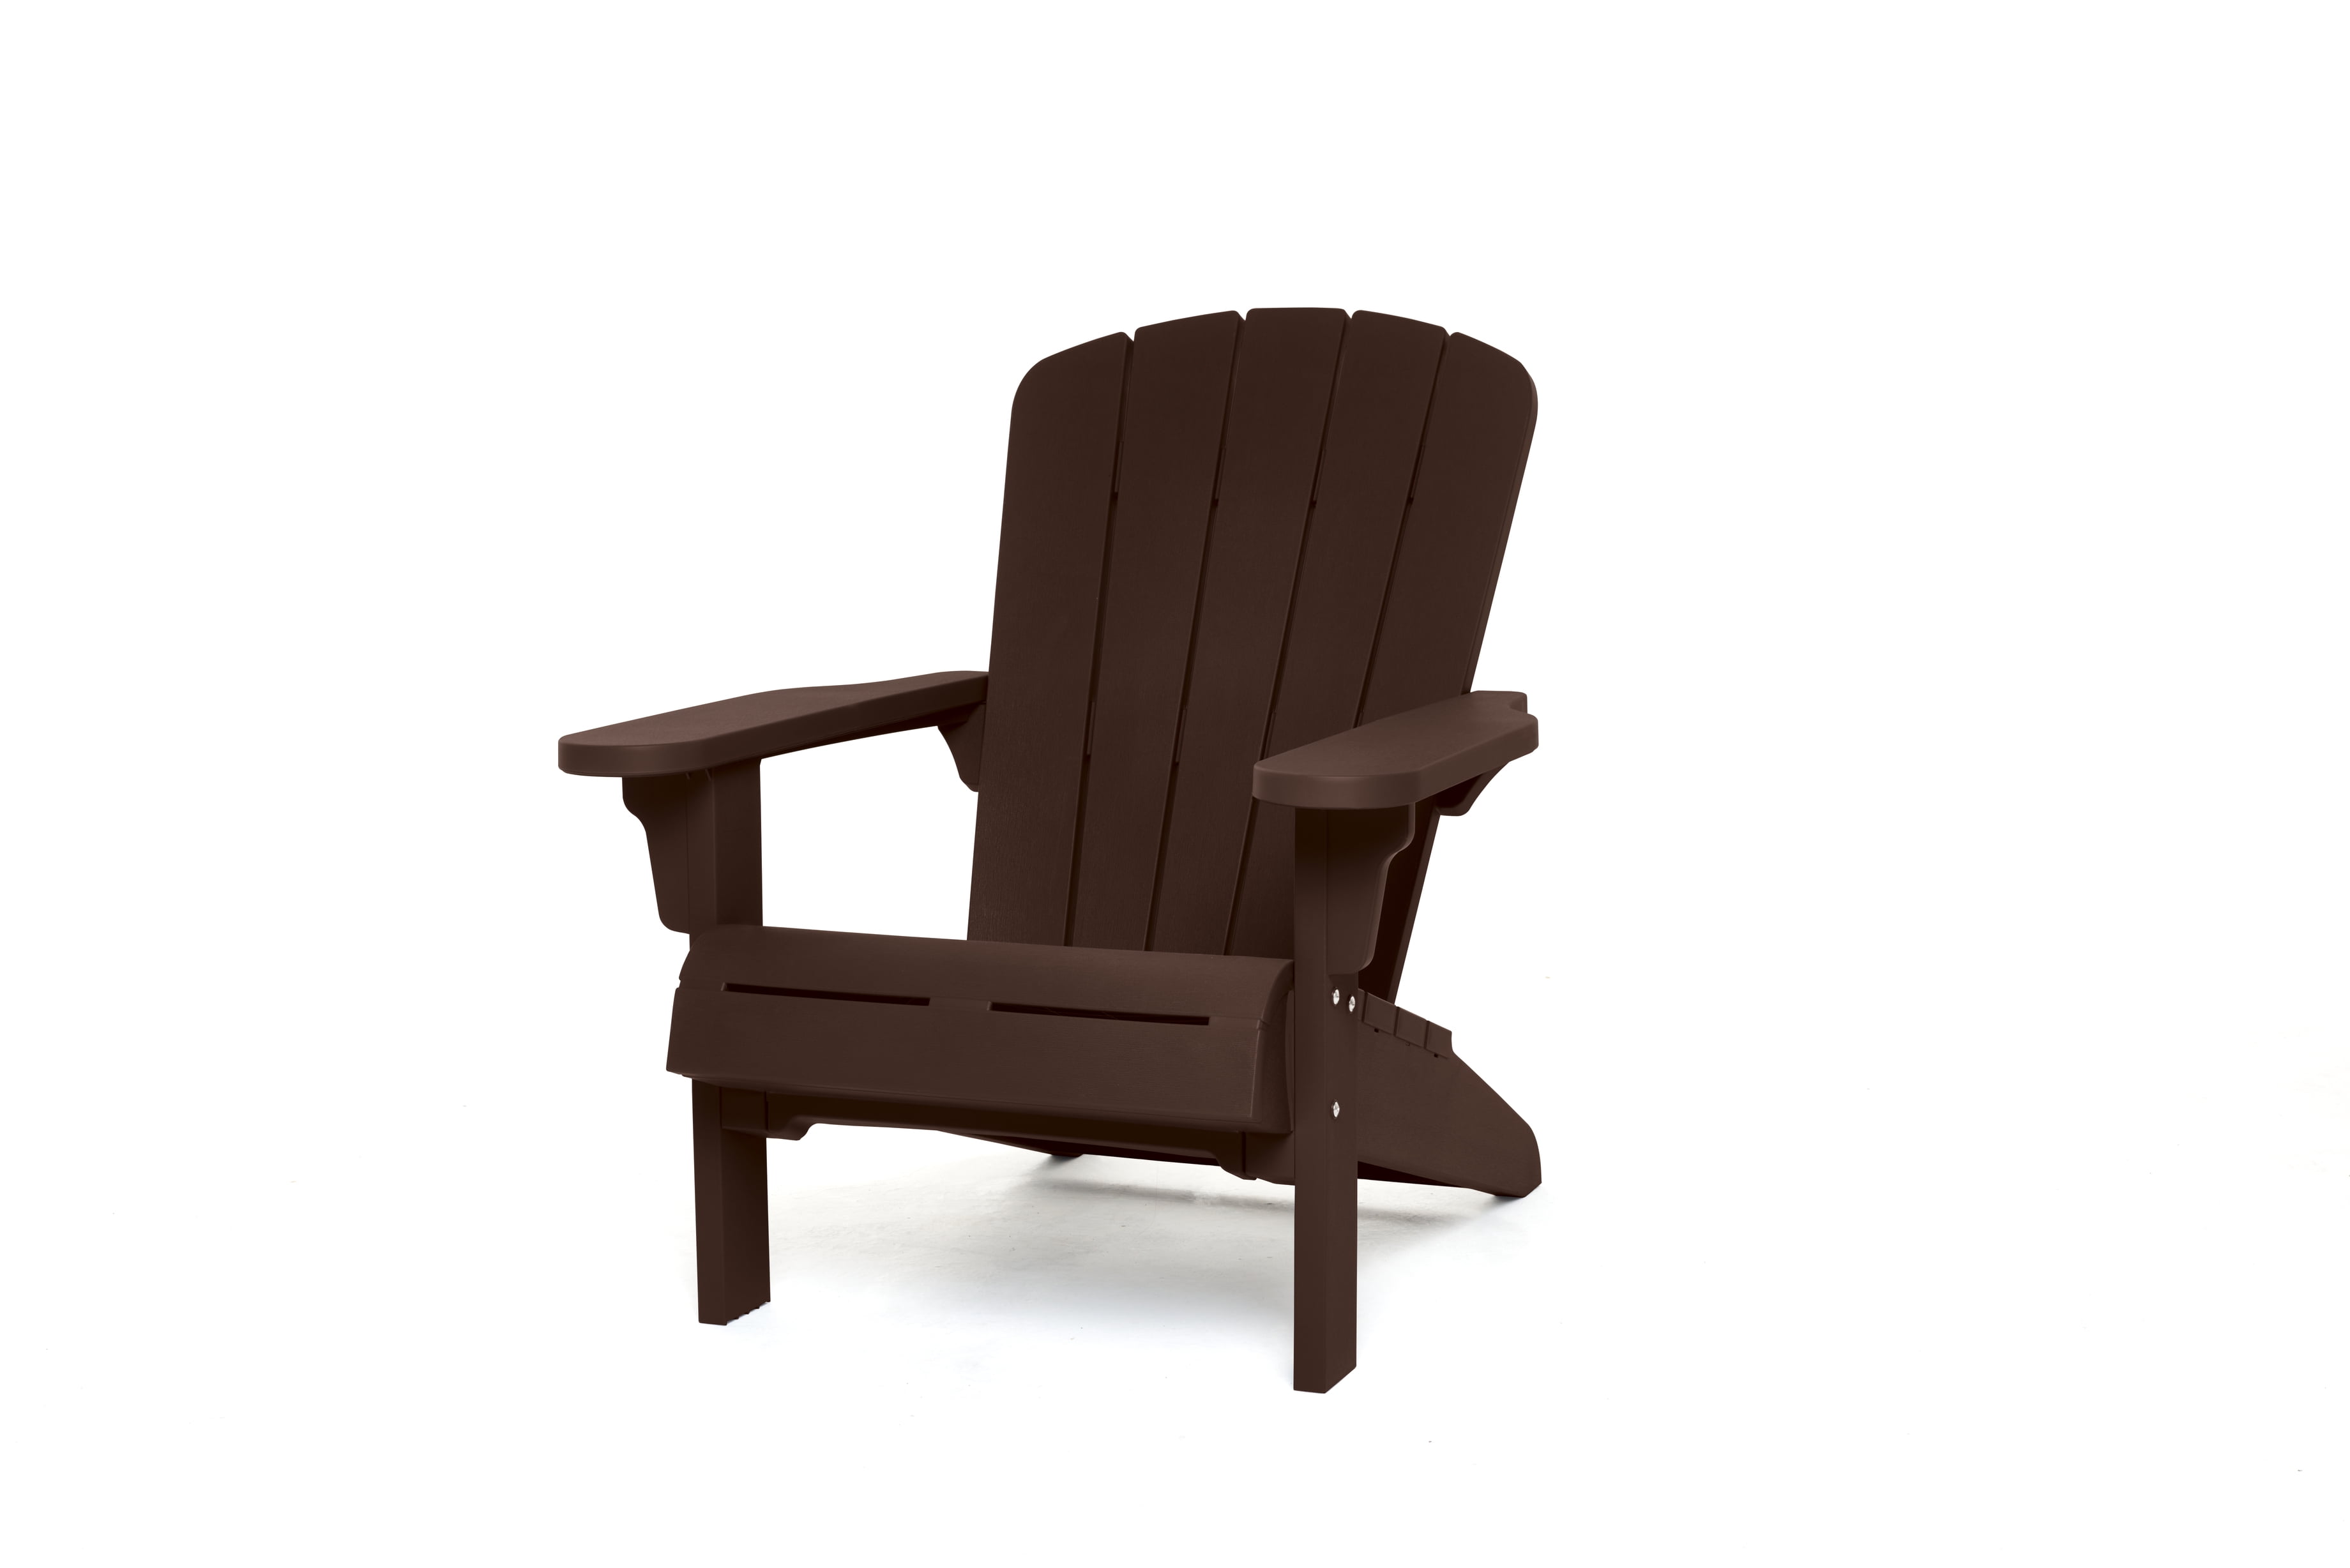 Keter Adirondack Chair, Resin Outdoor Furniture, Brown